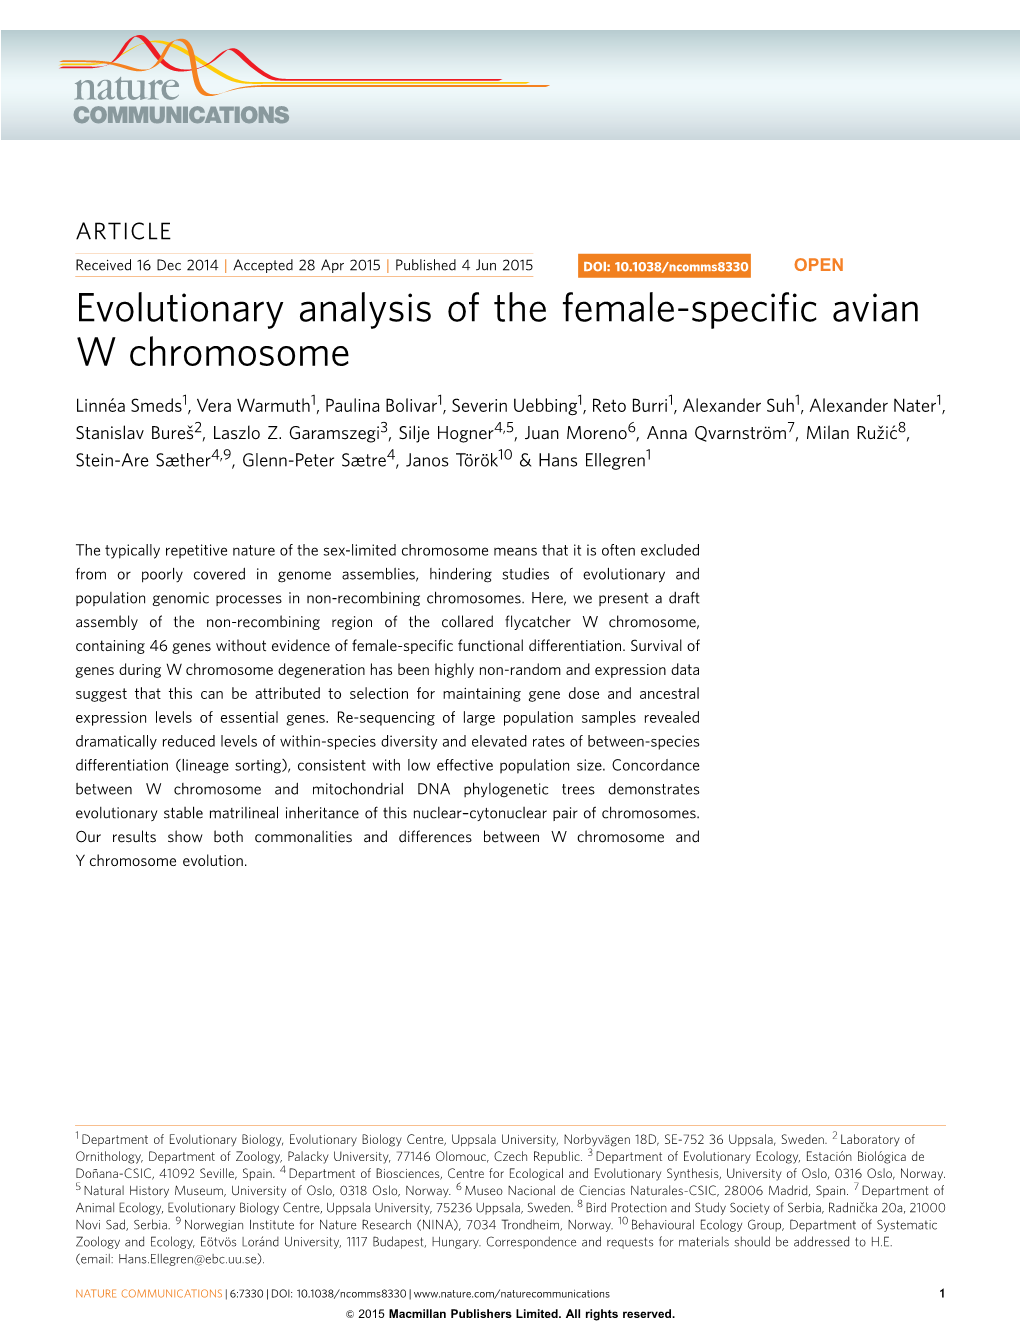 Evolutionary Analysis of the Female-Specific Avian W Chromosome